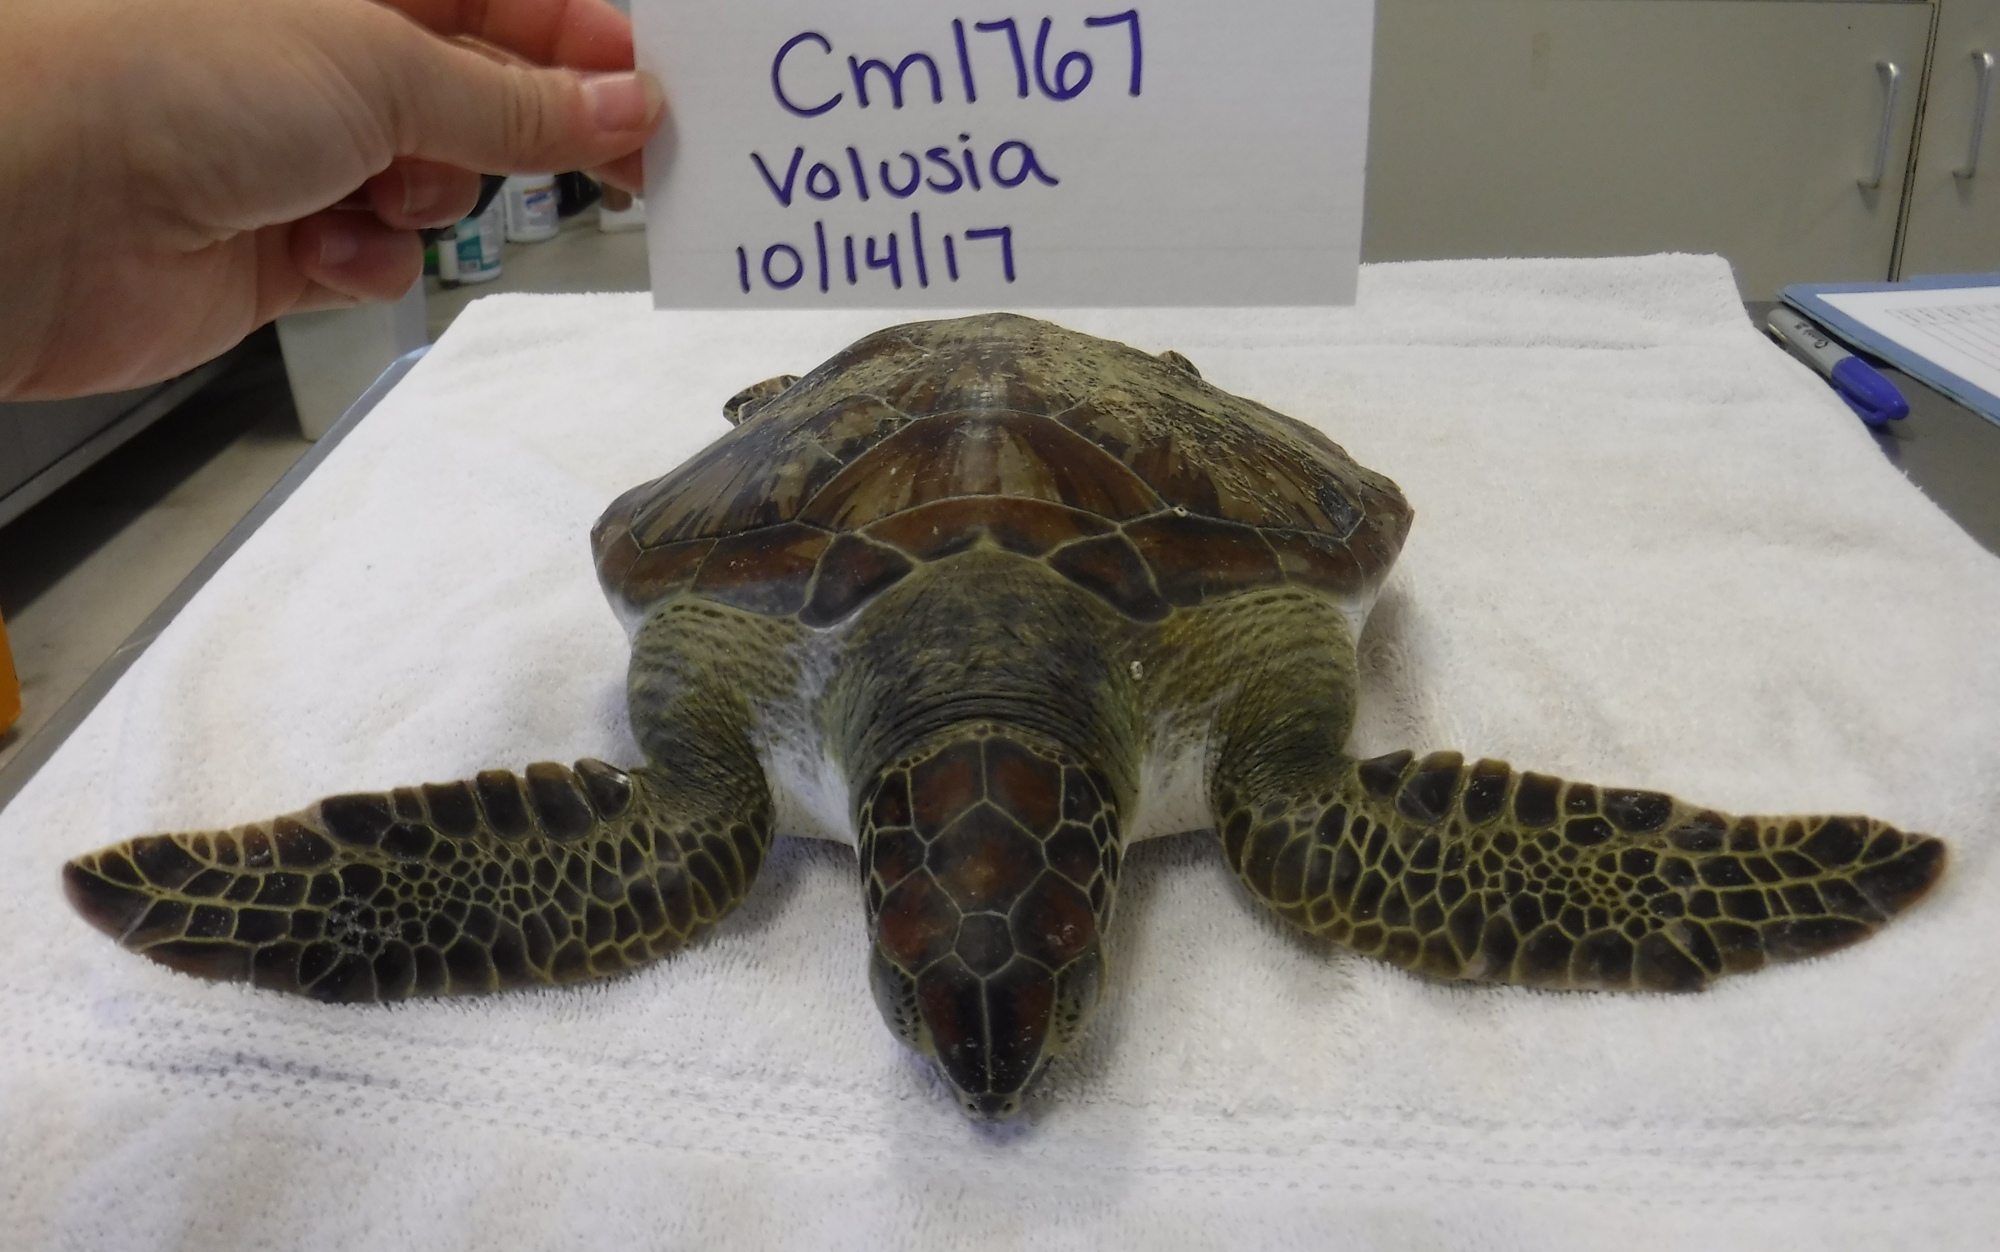 Hendrix the green sea turtle. Photo courtesy of Volusia County